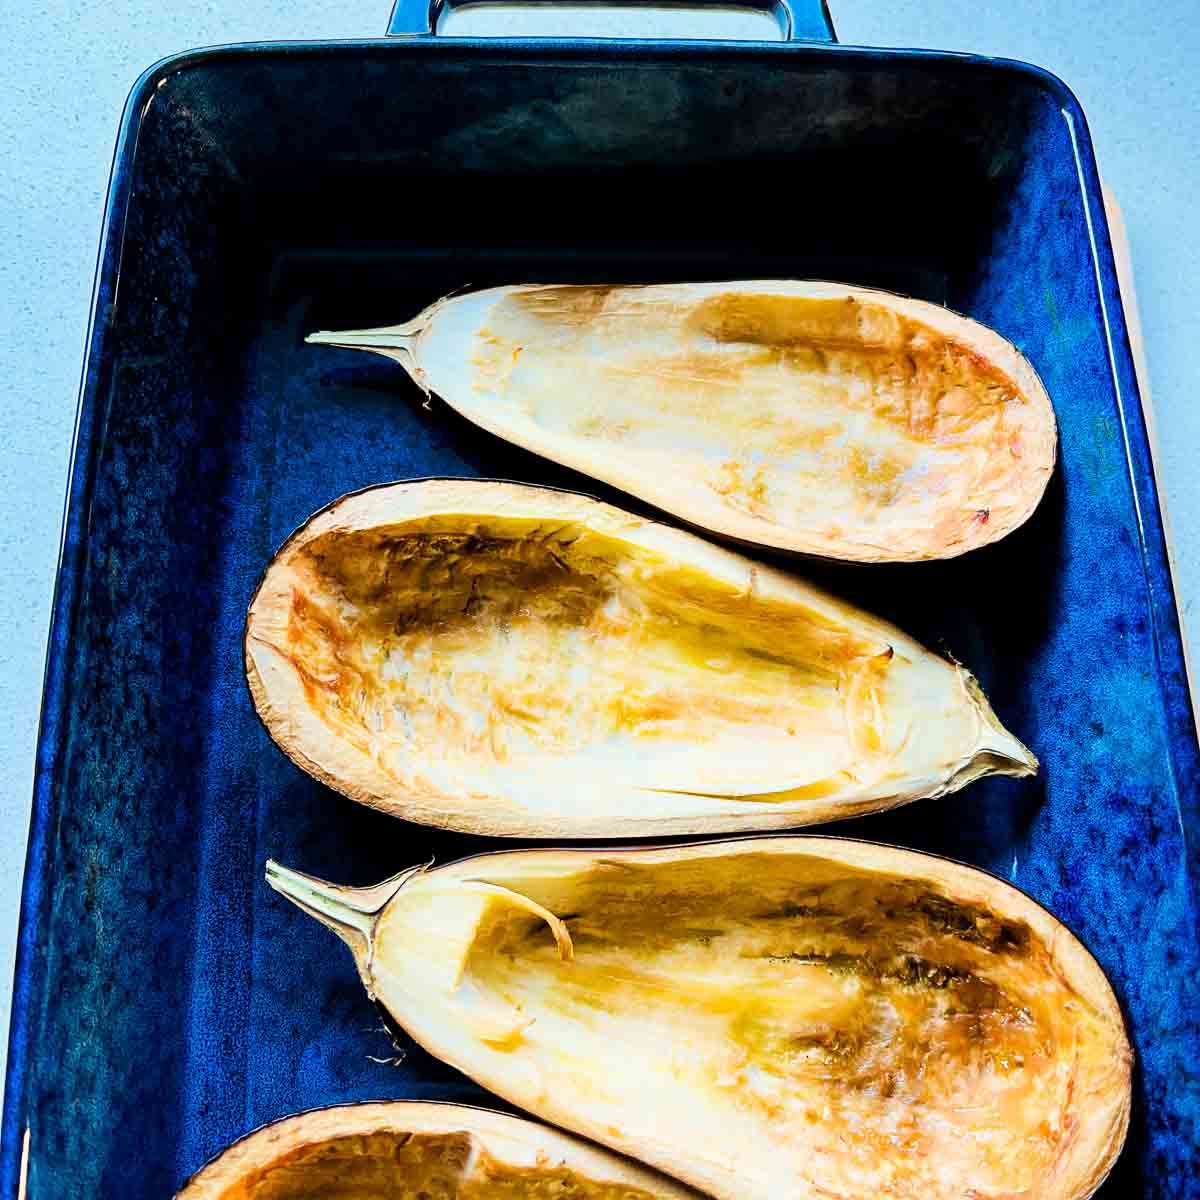 Prepared eggplants roasted in a baking dish.